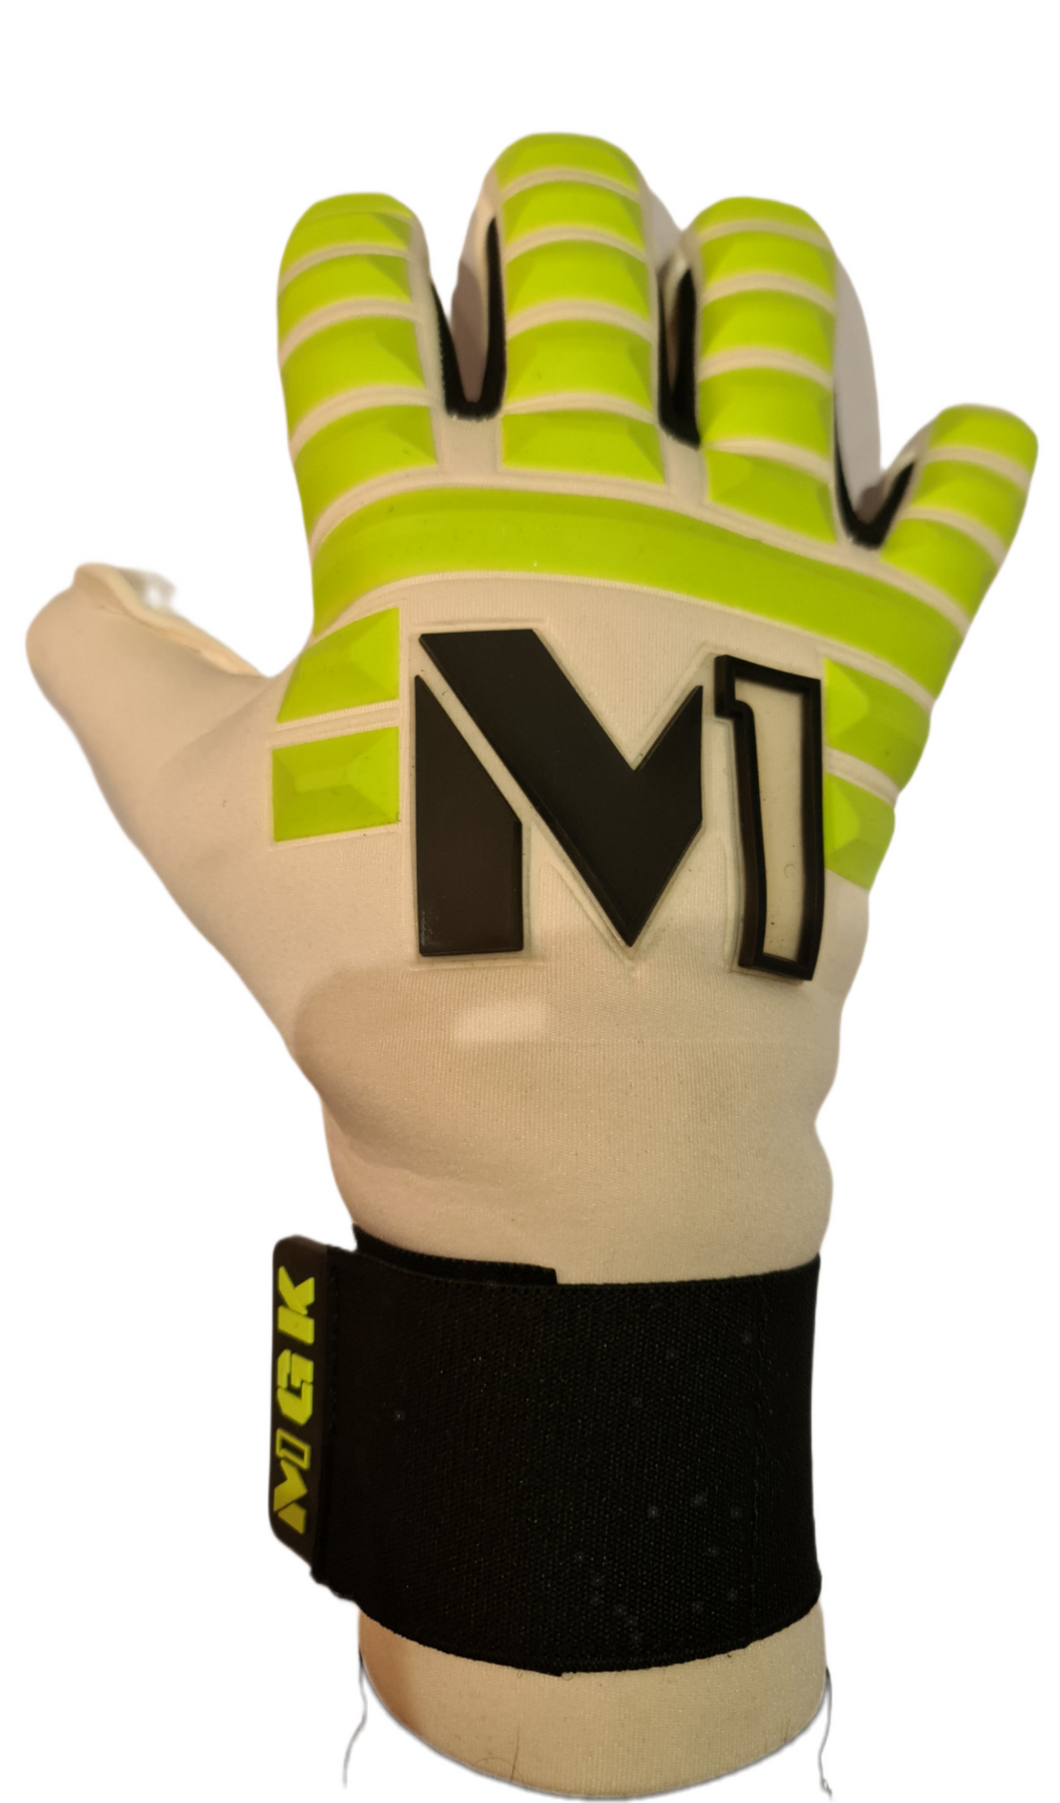 M1 Viper White/Yellow/Black Goalkeeper Gloves